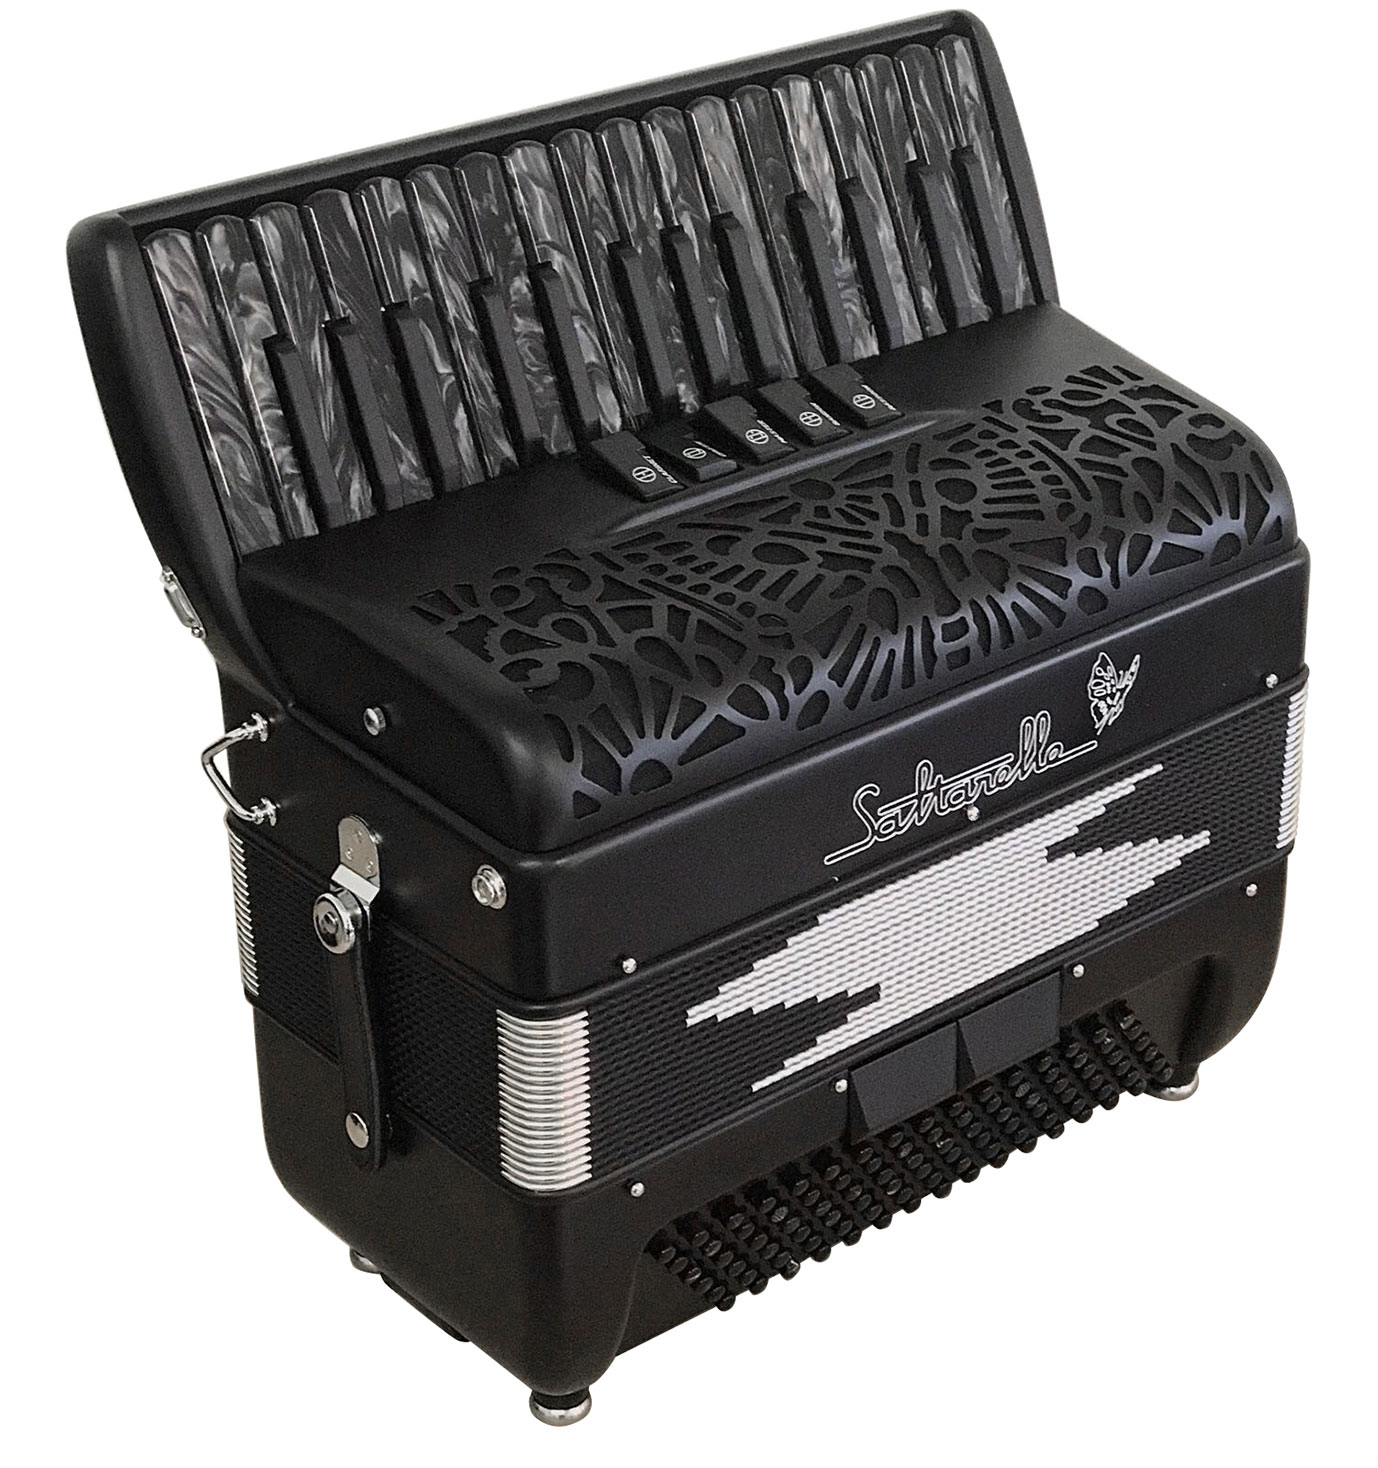 Impulse chromatic accordion model